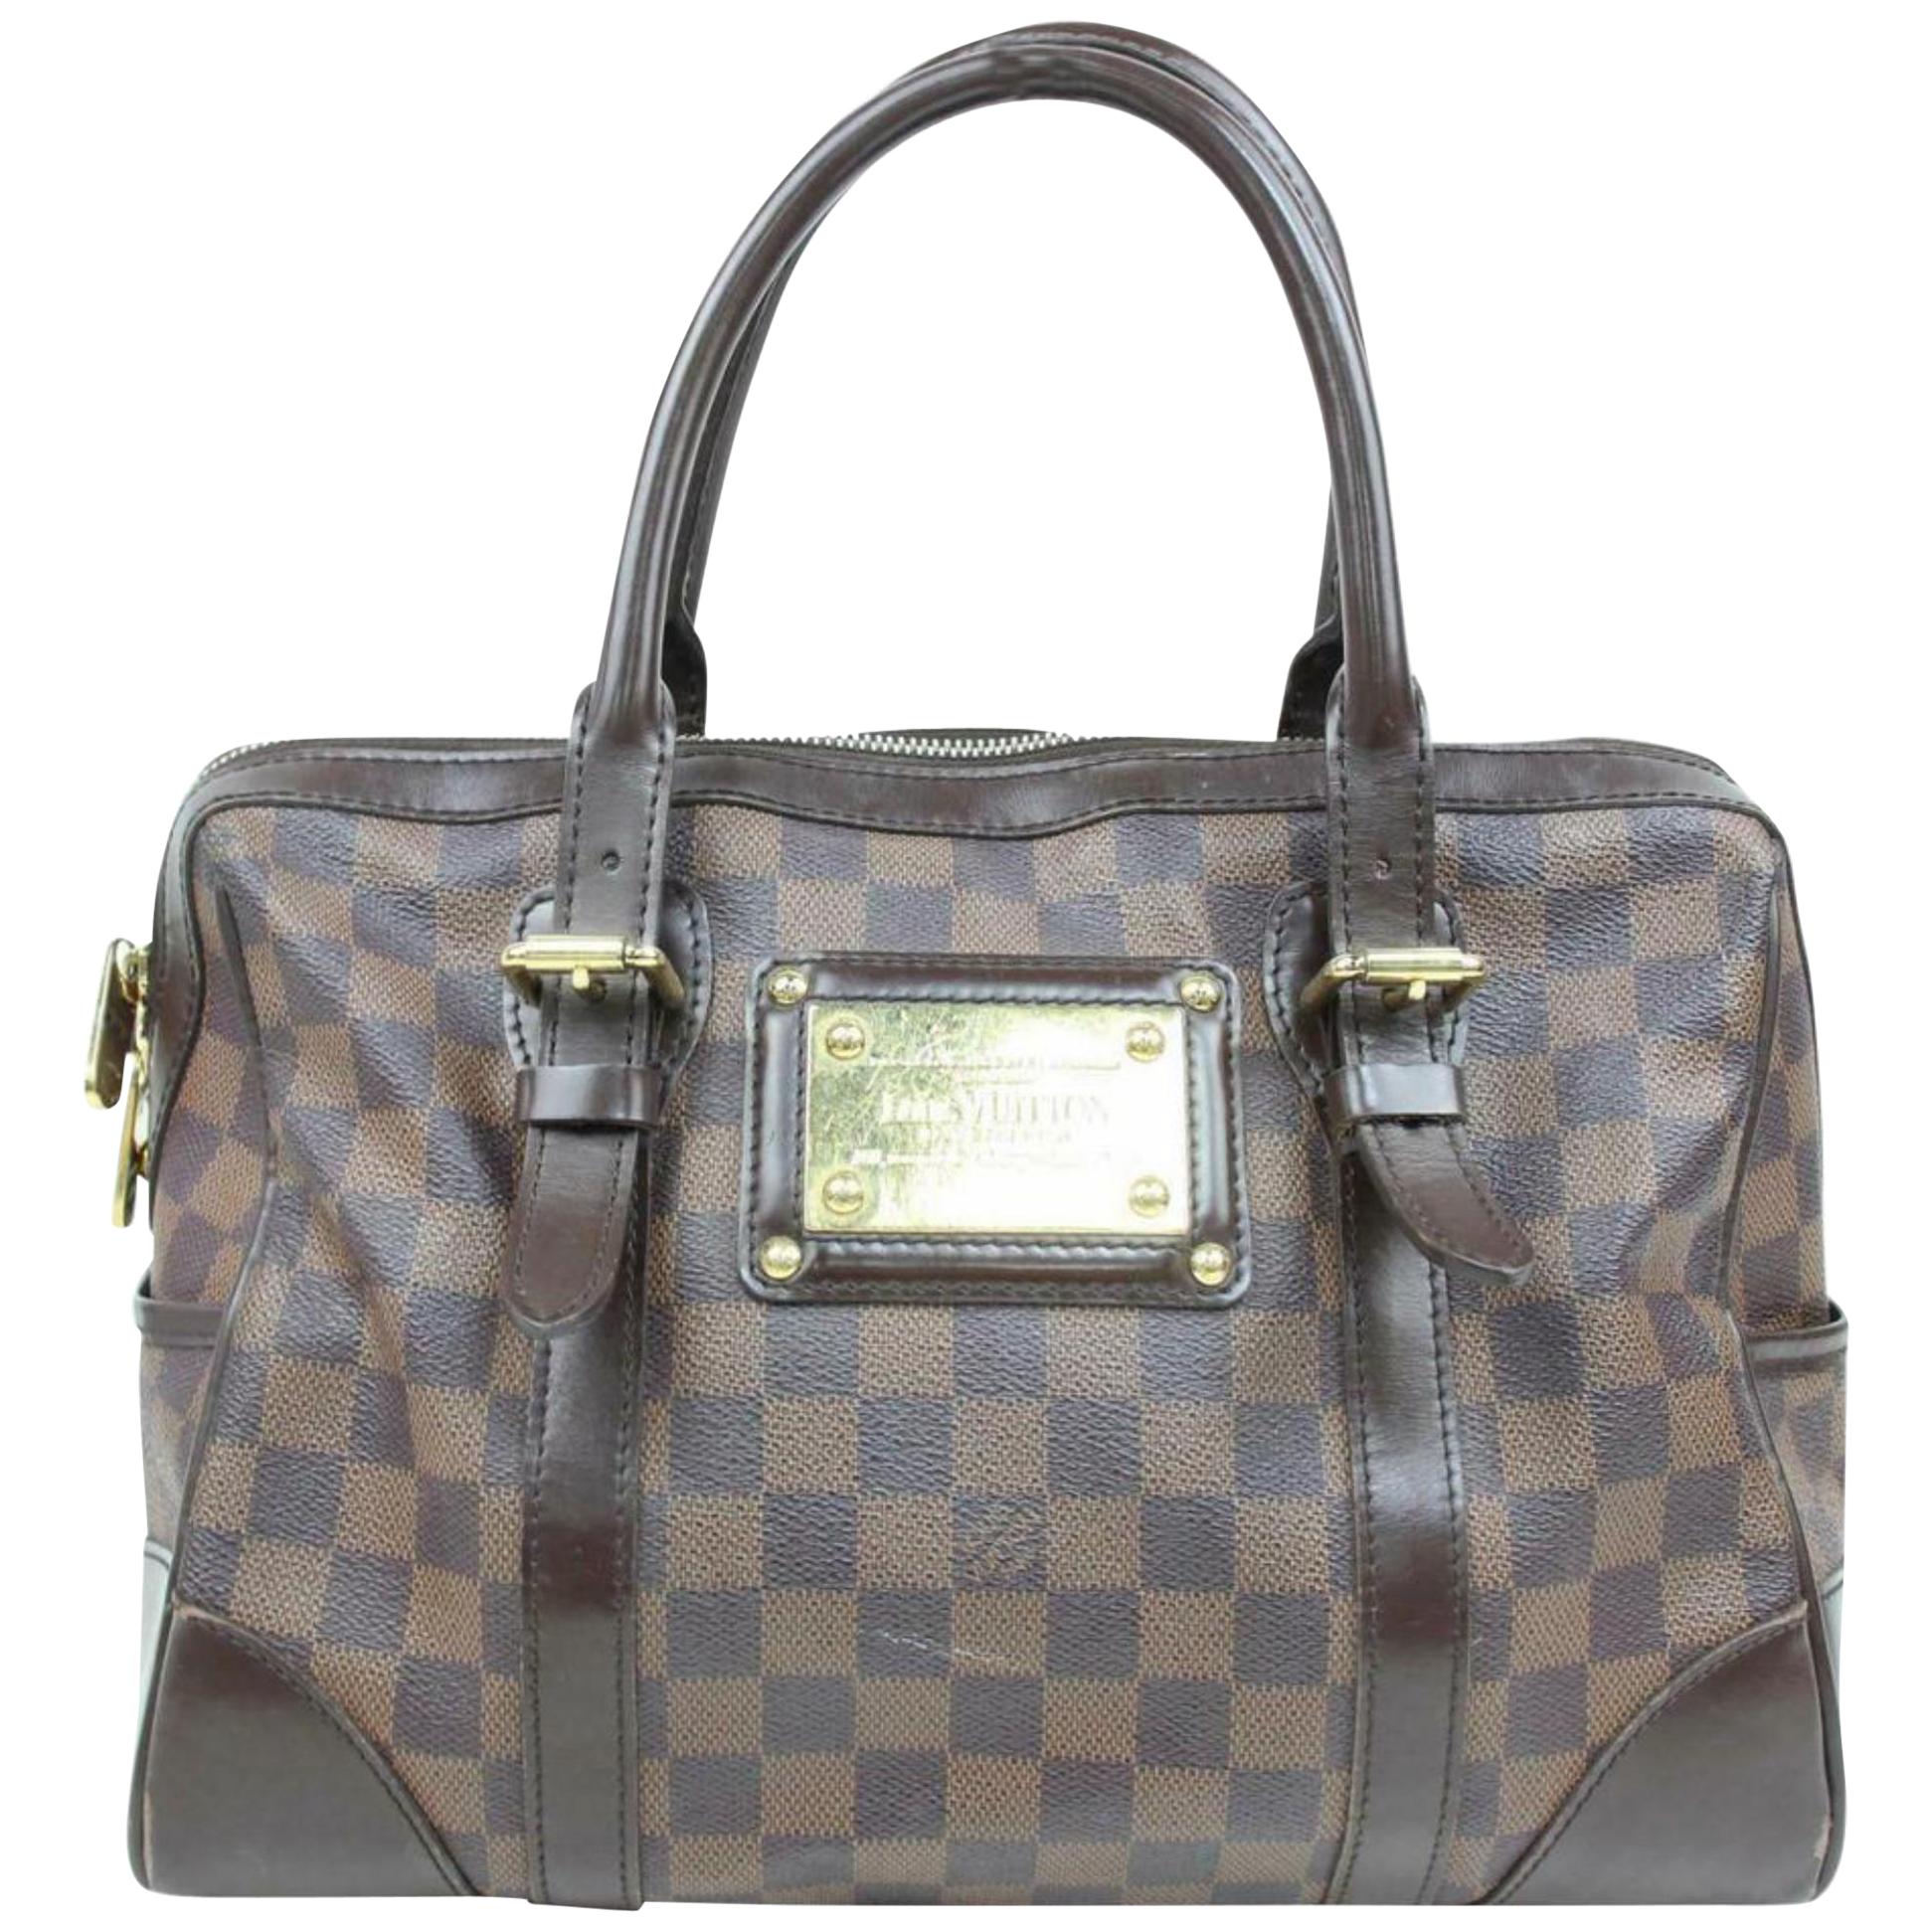 Louis Vuitton Berkeley - For Sale on 1stDibs  louis vuitton berkeley bag,  berkeley bags price, lv berkeley monogram